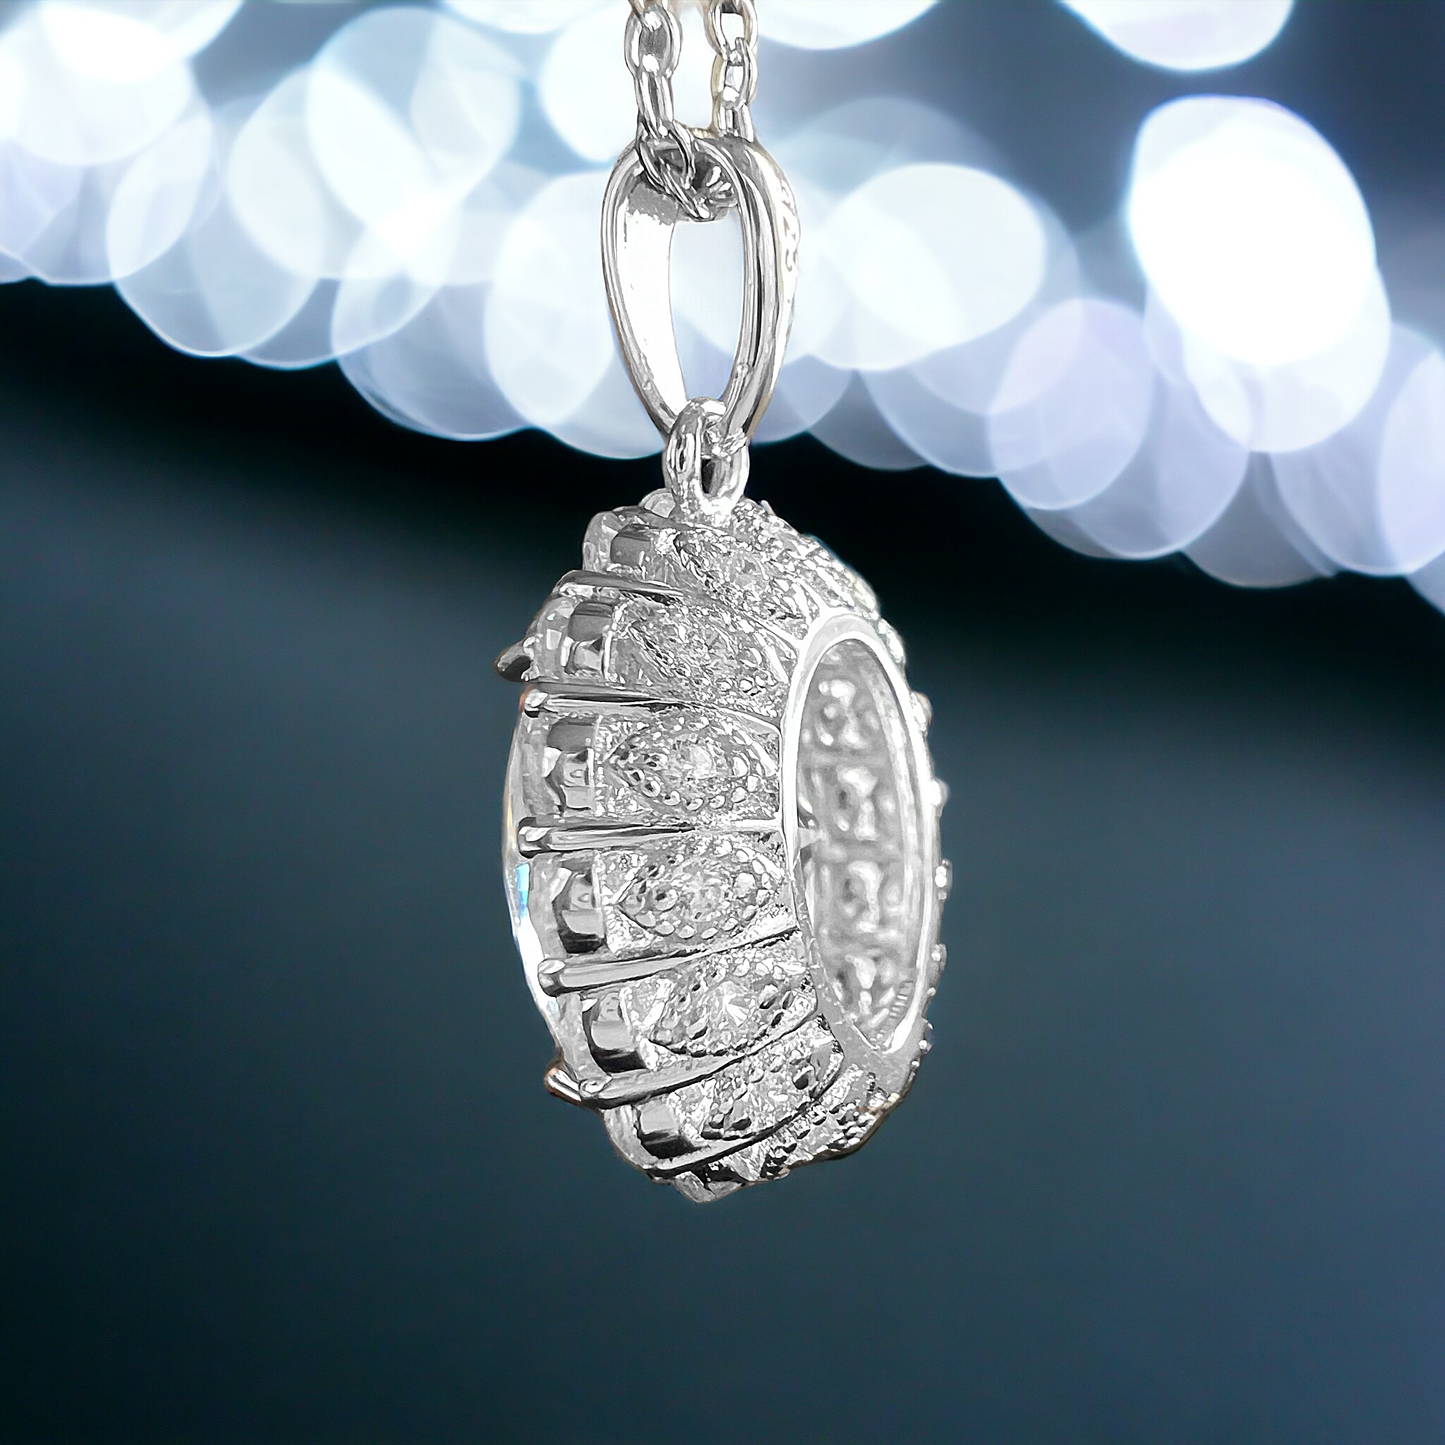 925 Sterling Silver Oval Cut Diamond CZ Halo Pendant Necklace